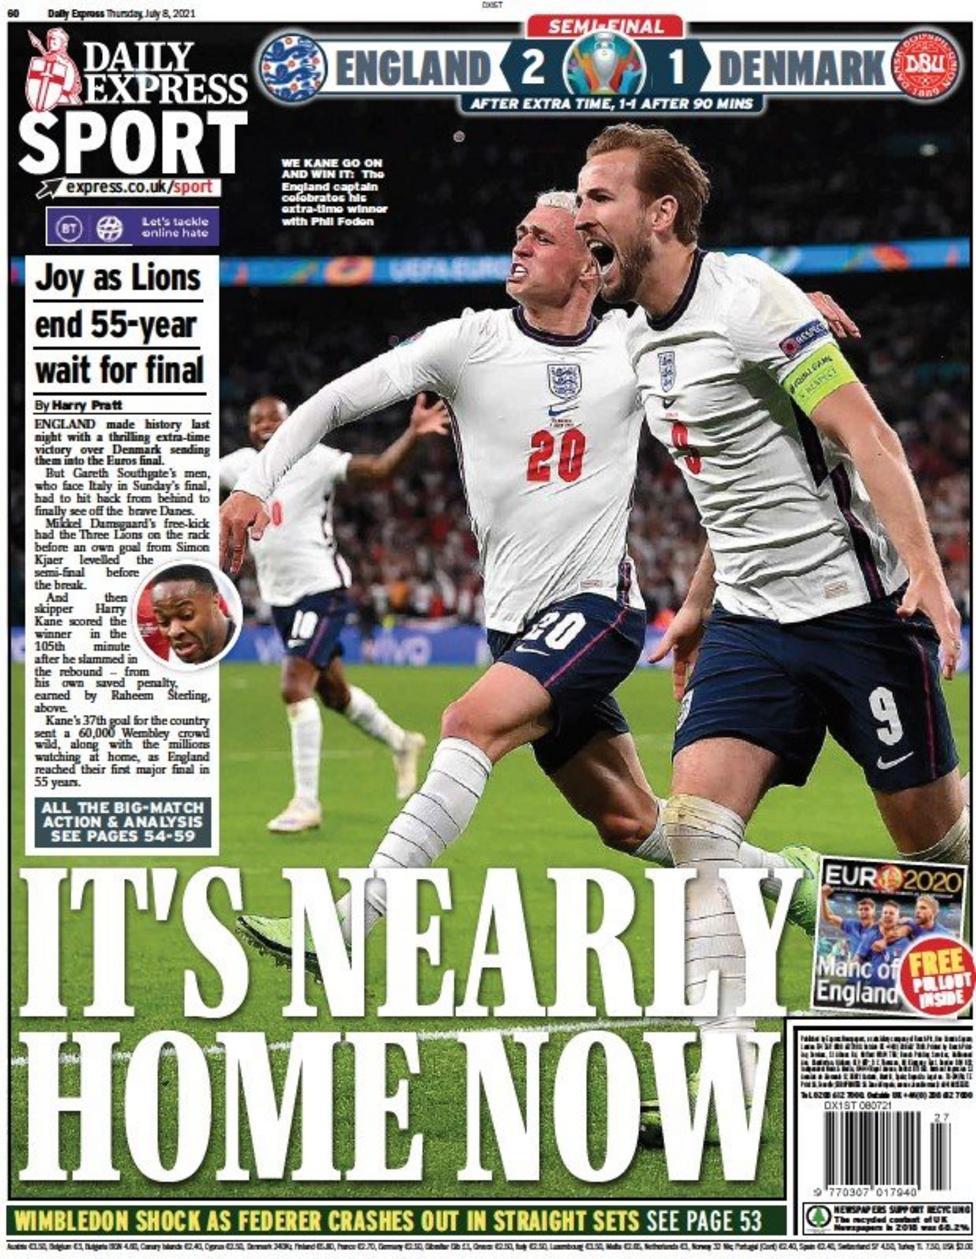 Thursday's sports pages - BBC Sport